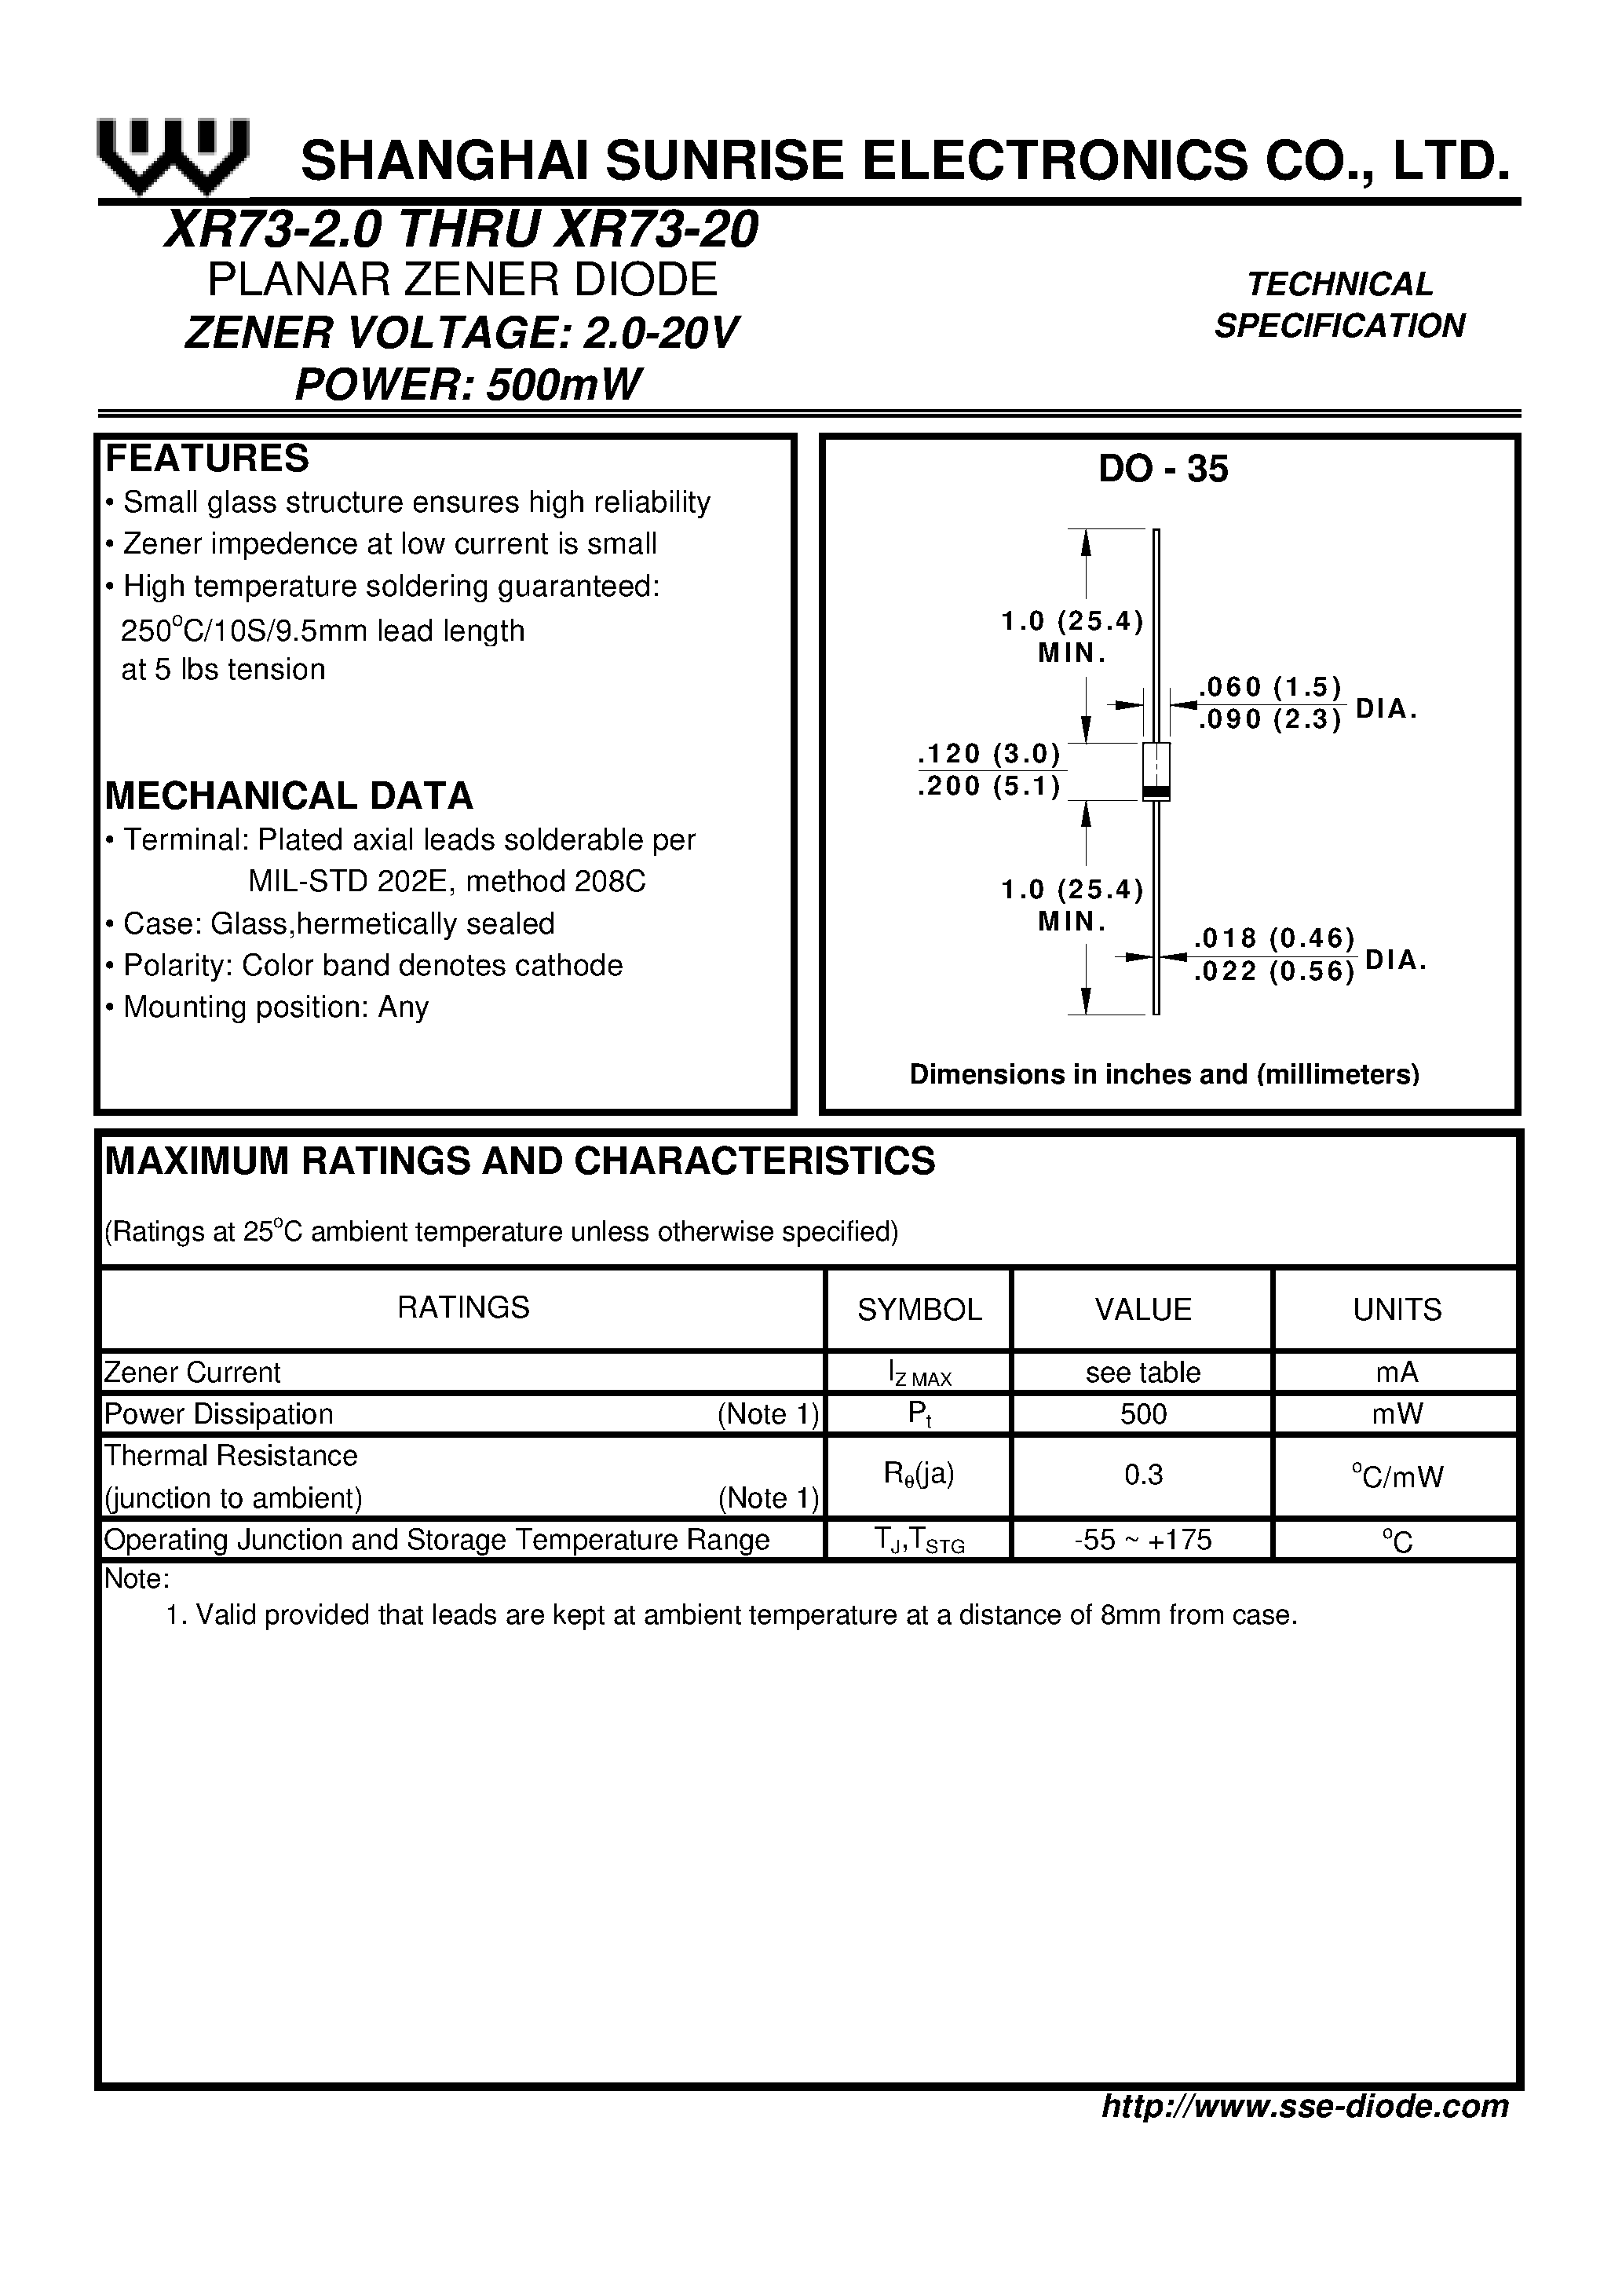 Datasheet XR73-9.1 - PLANAR ZENER DIODE page 1